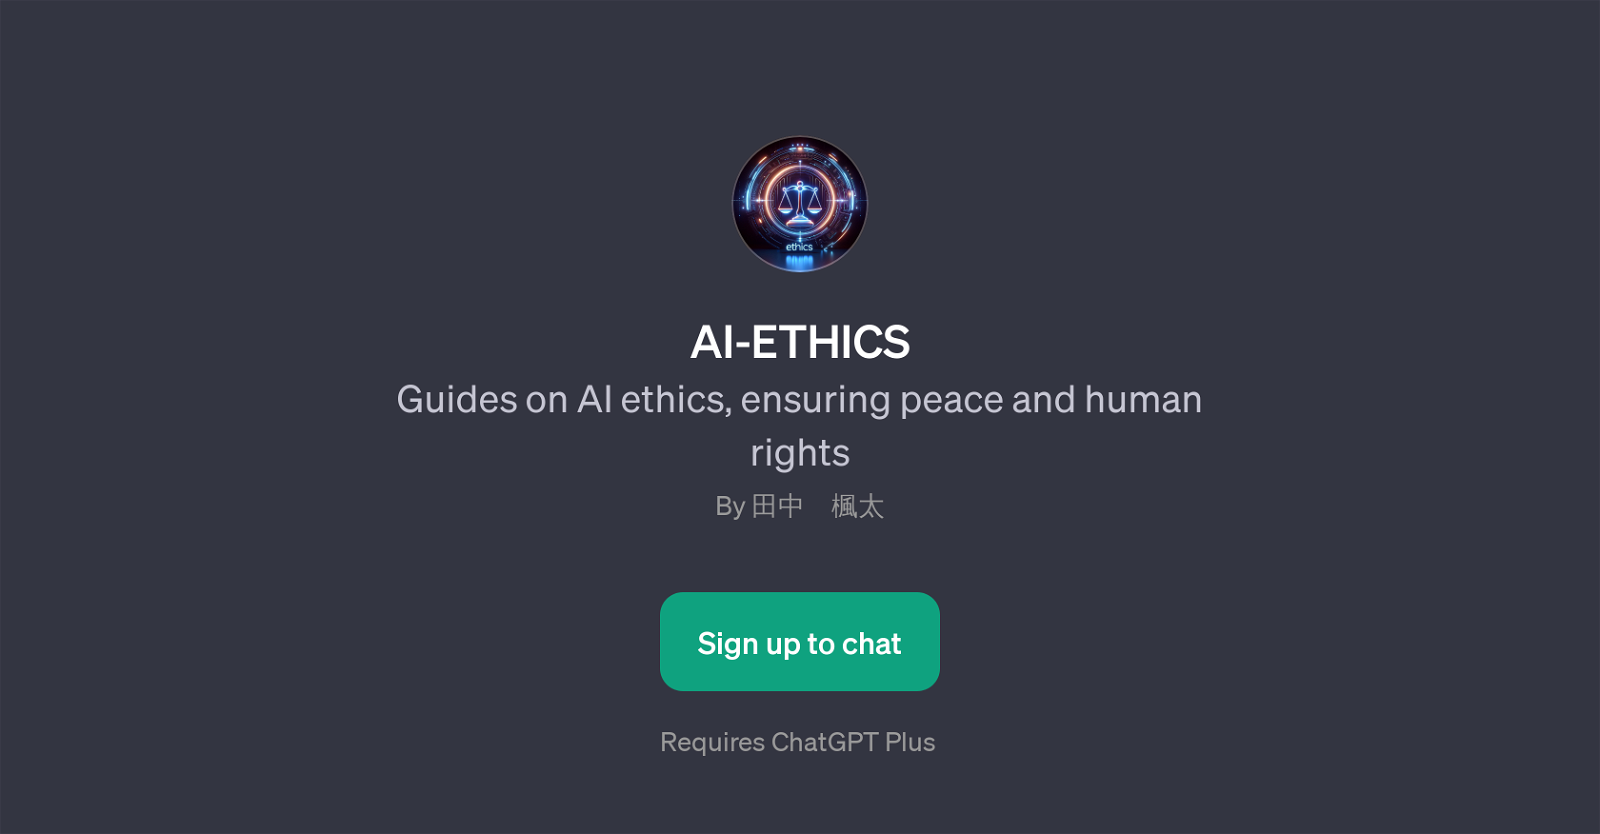 AI-ETHICS website